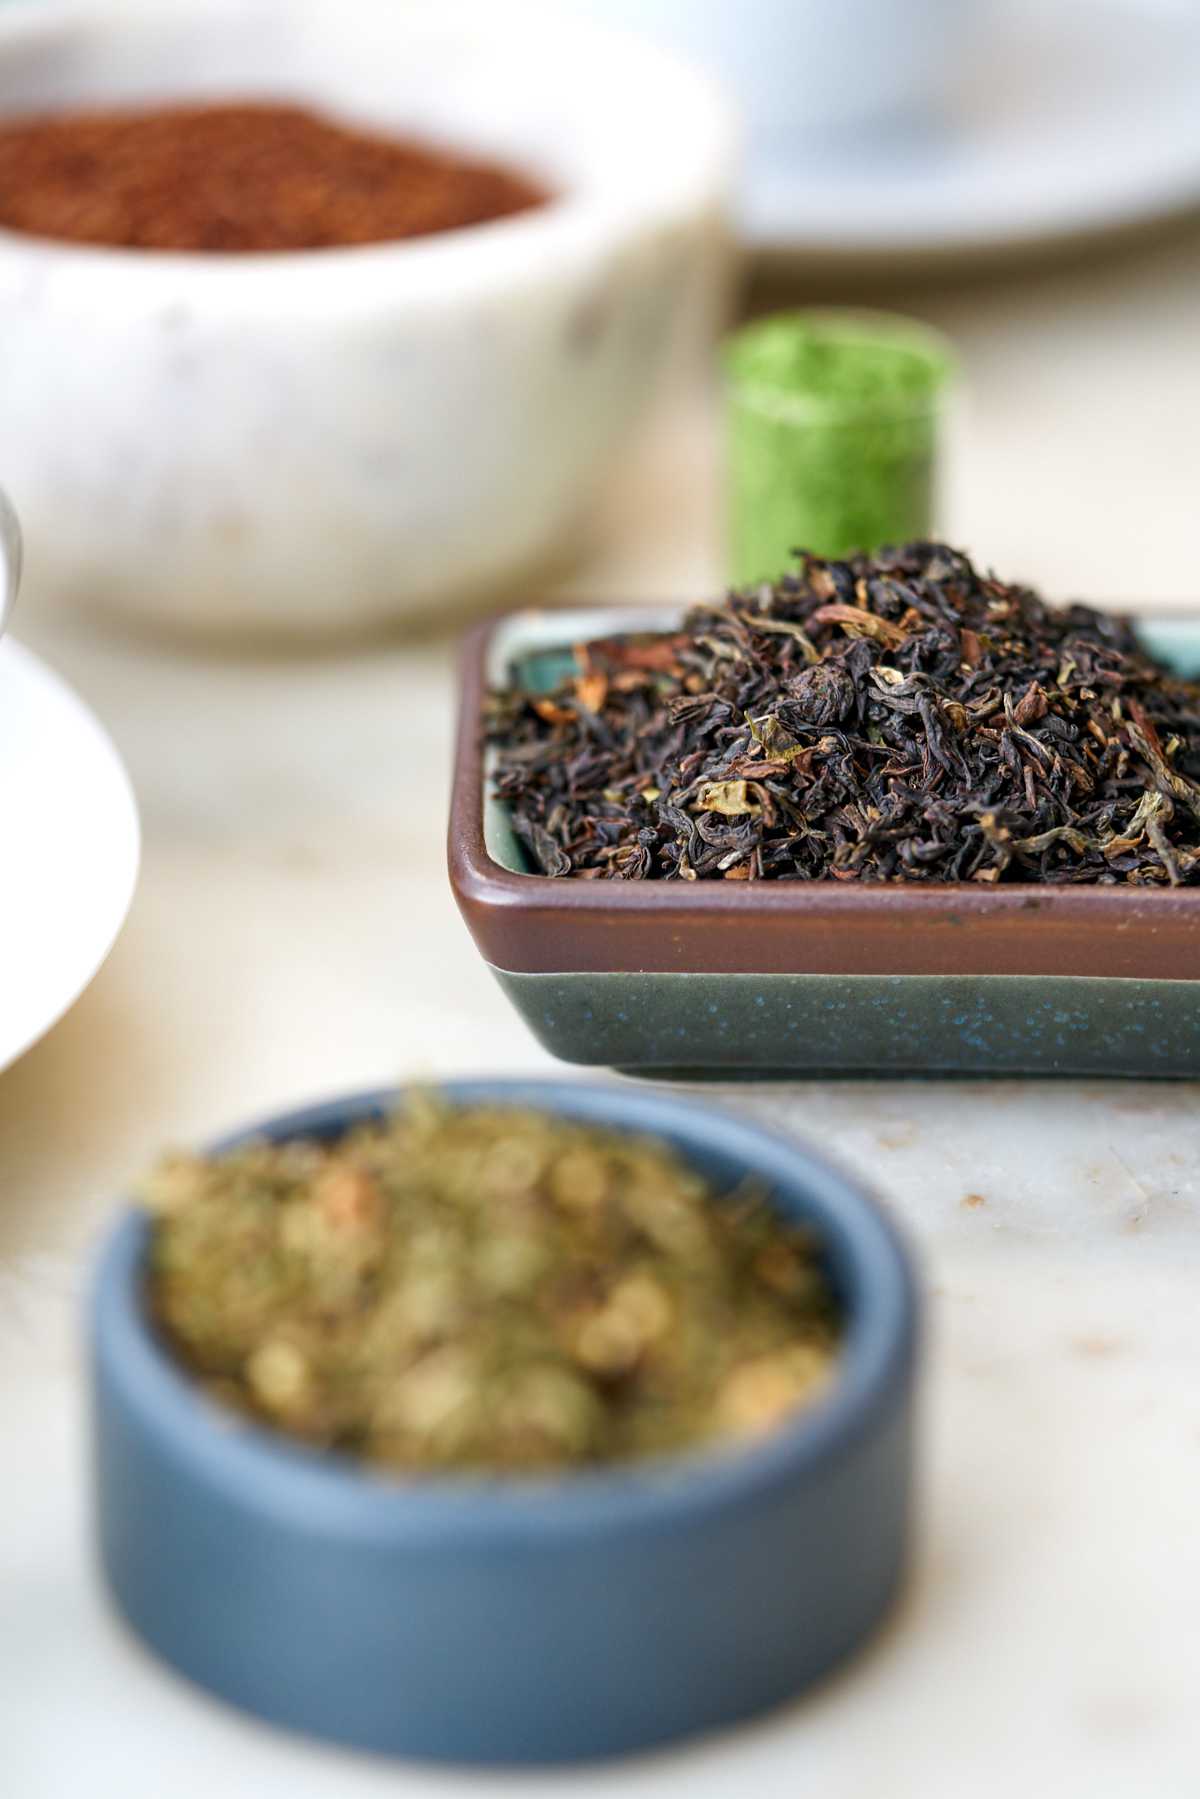 Loose leaf black tea in a ceramic dish.